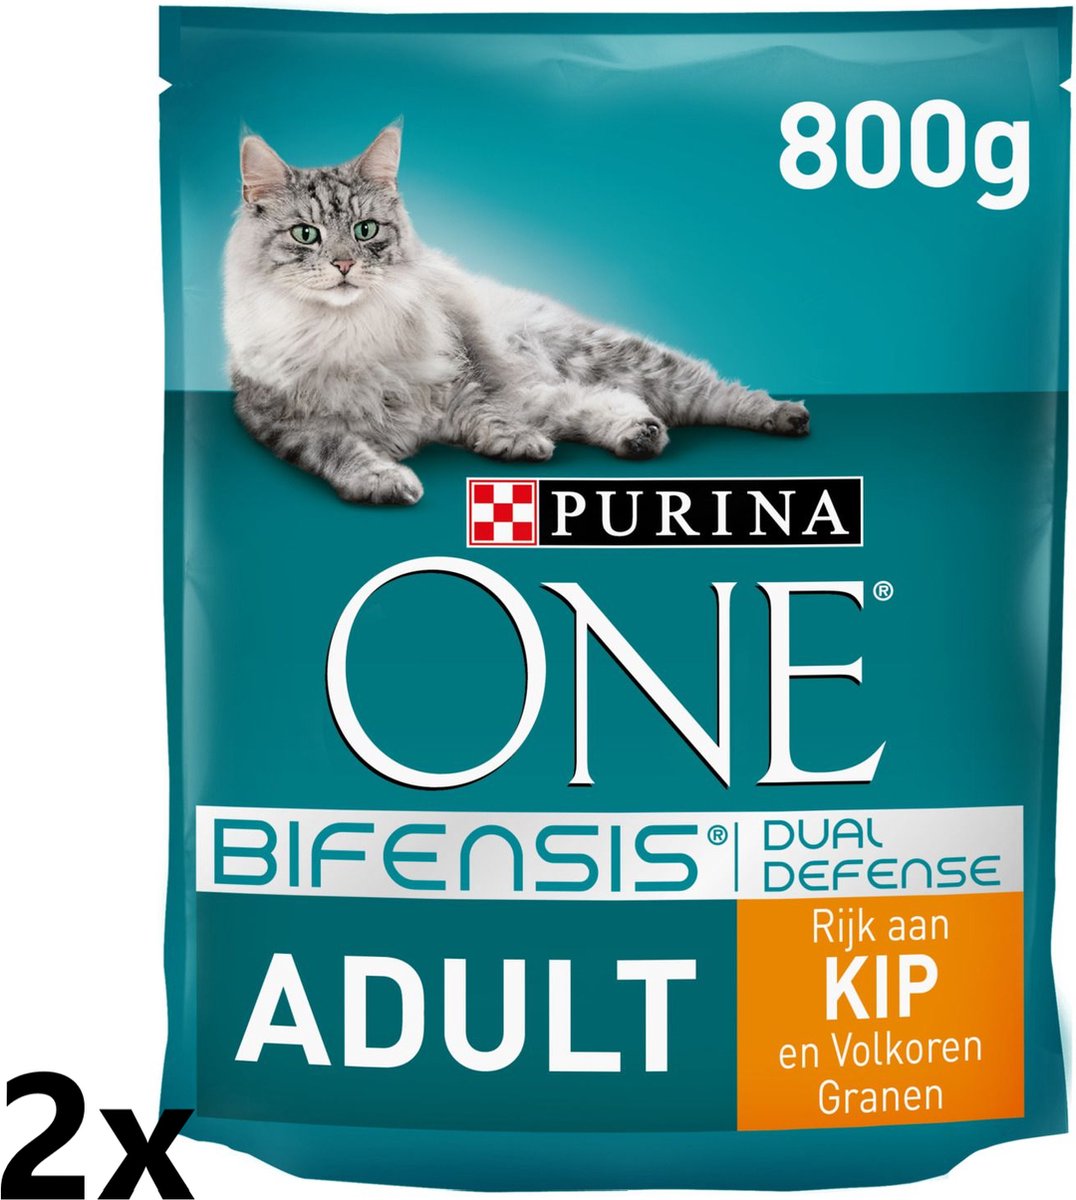 Purina One - Adult - Kip & Granen - Kattenvoer - 2x800g